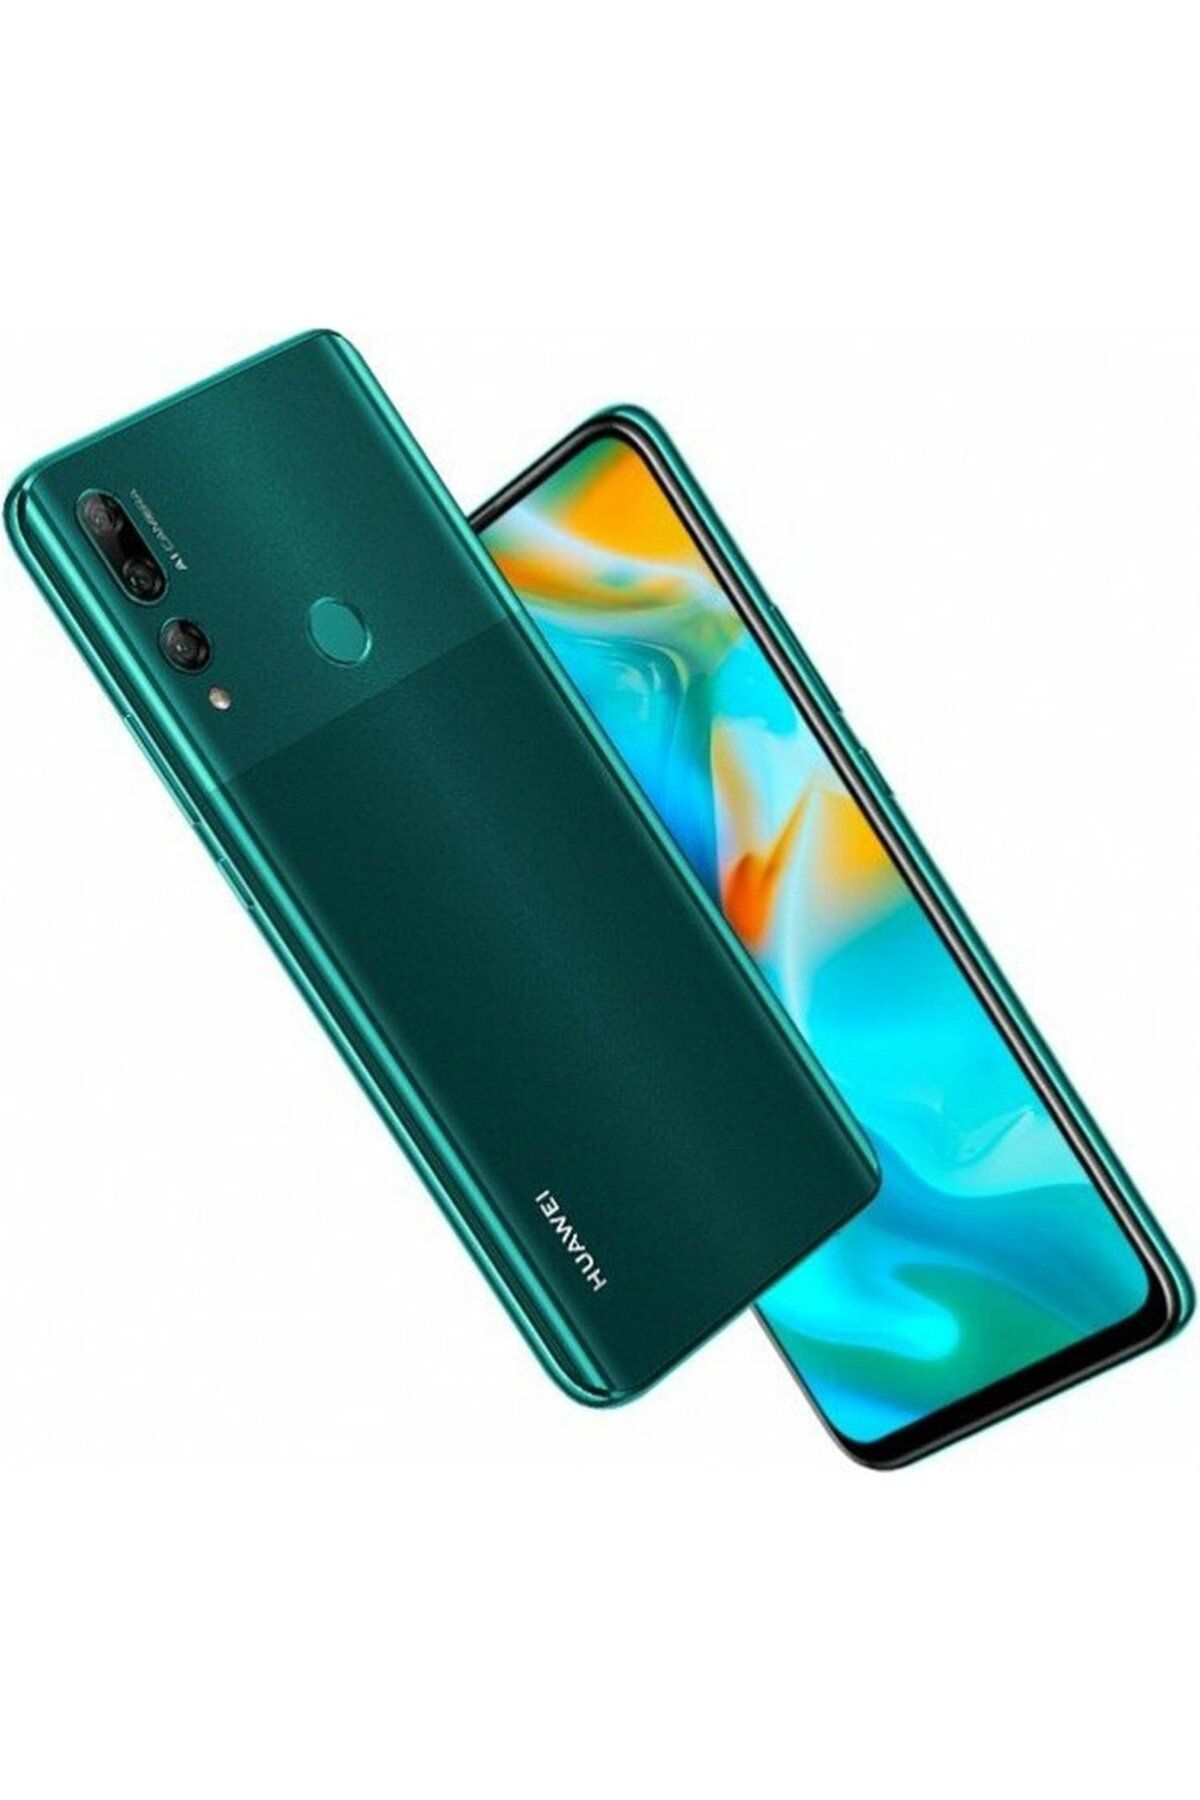 Huawei Yenilenmiş Huawei Y9 Prime 2019 128GB Yeşil B Kalite